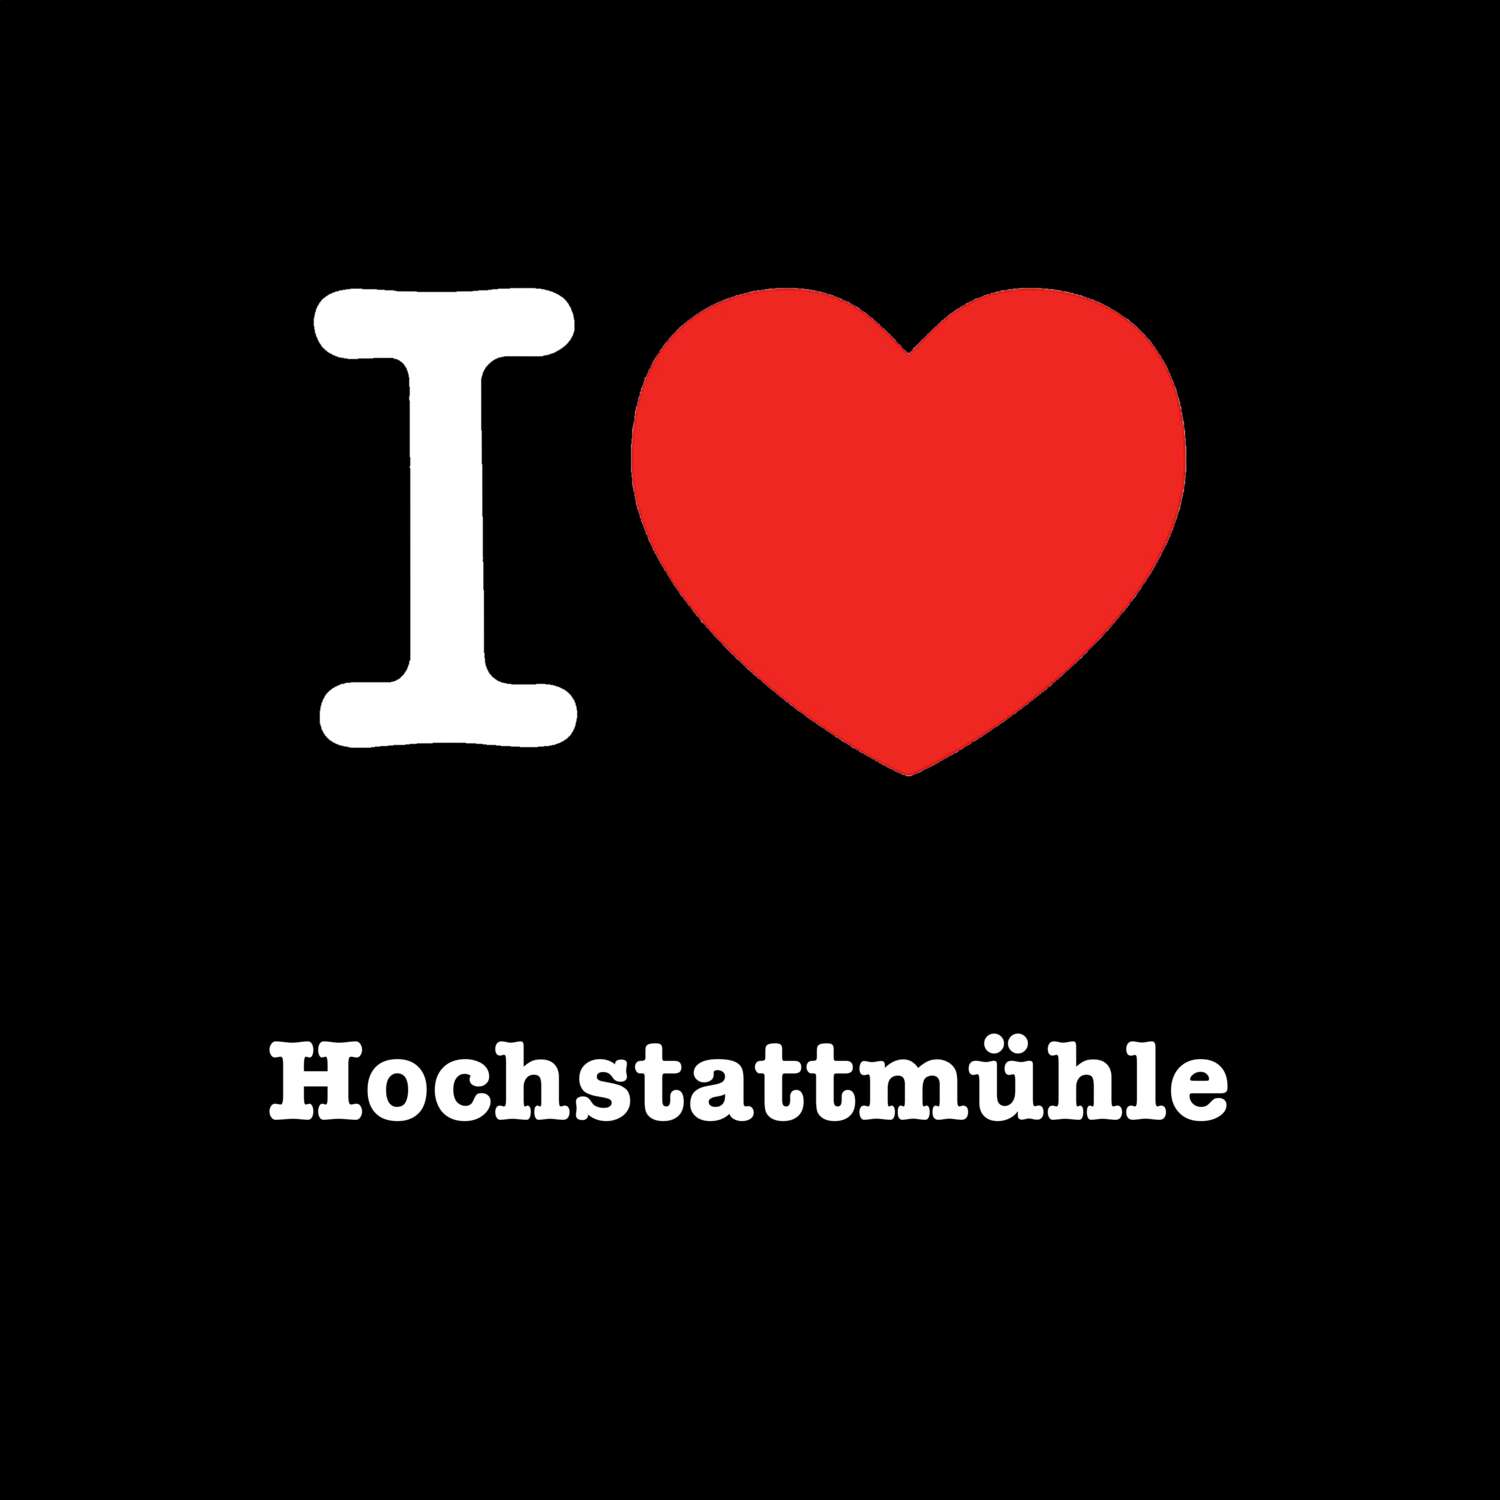 Hochstattmühle T-Shirt »I love«